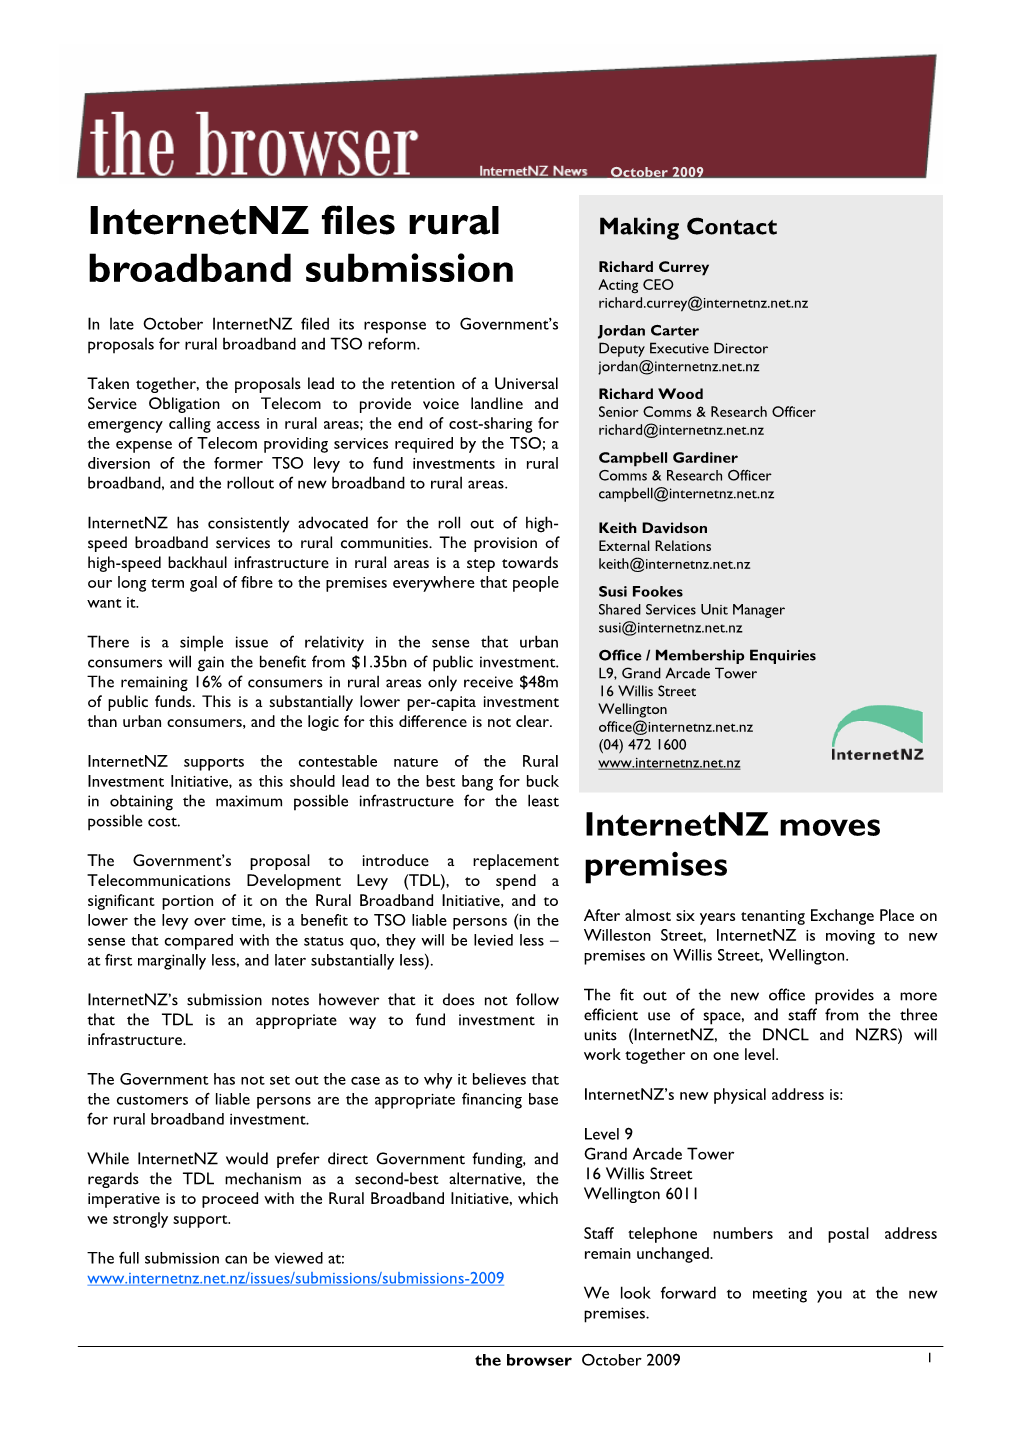 Internetnz Files Rural Broadband Submission